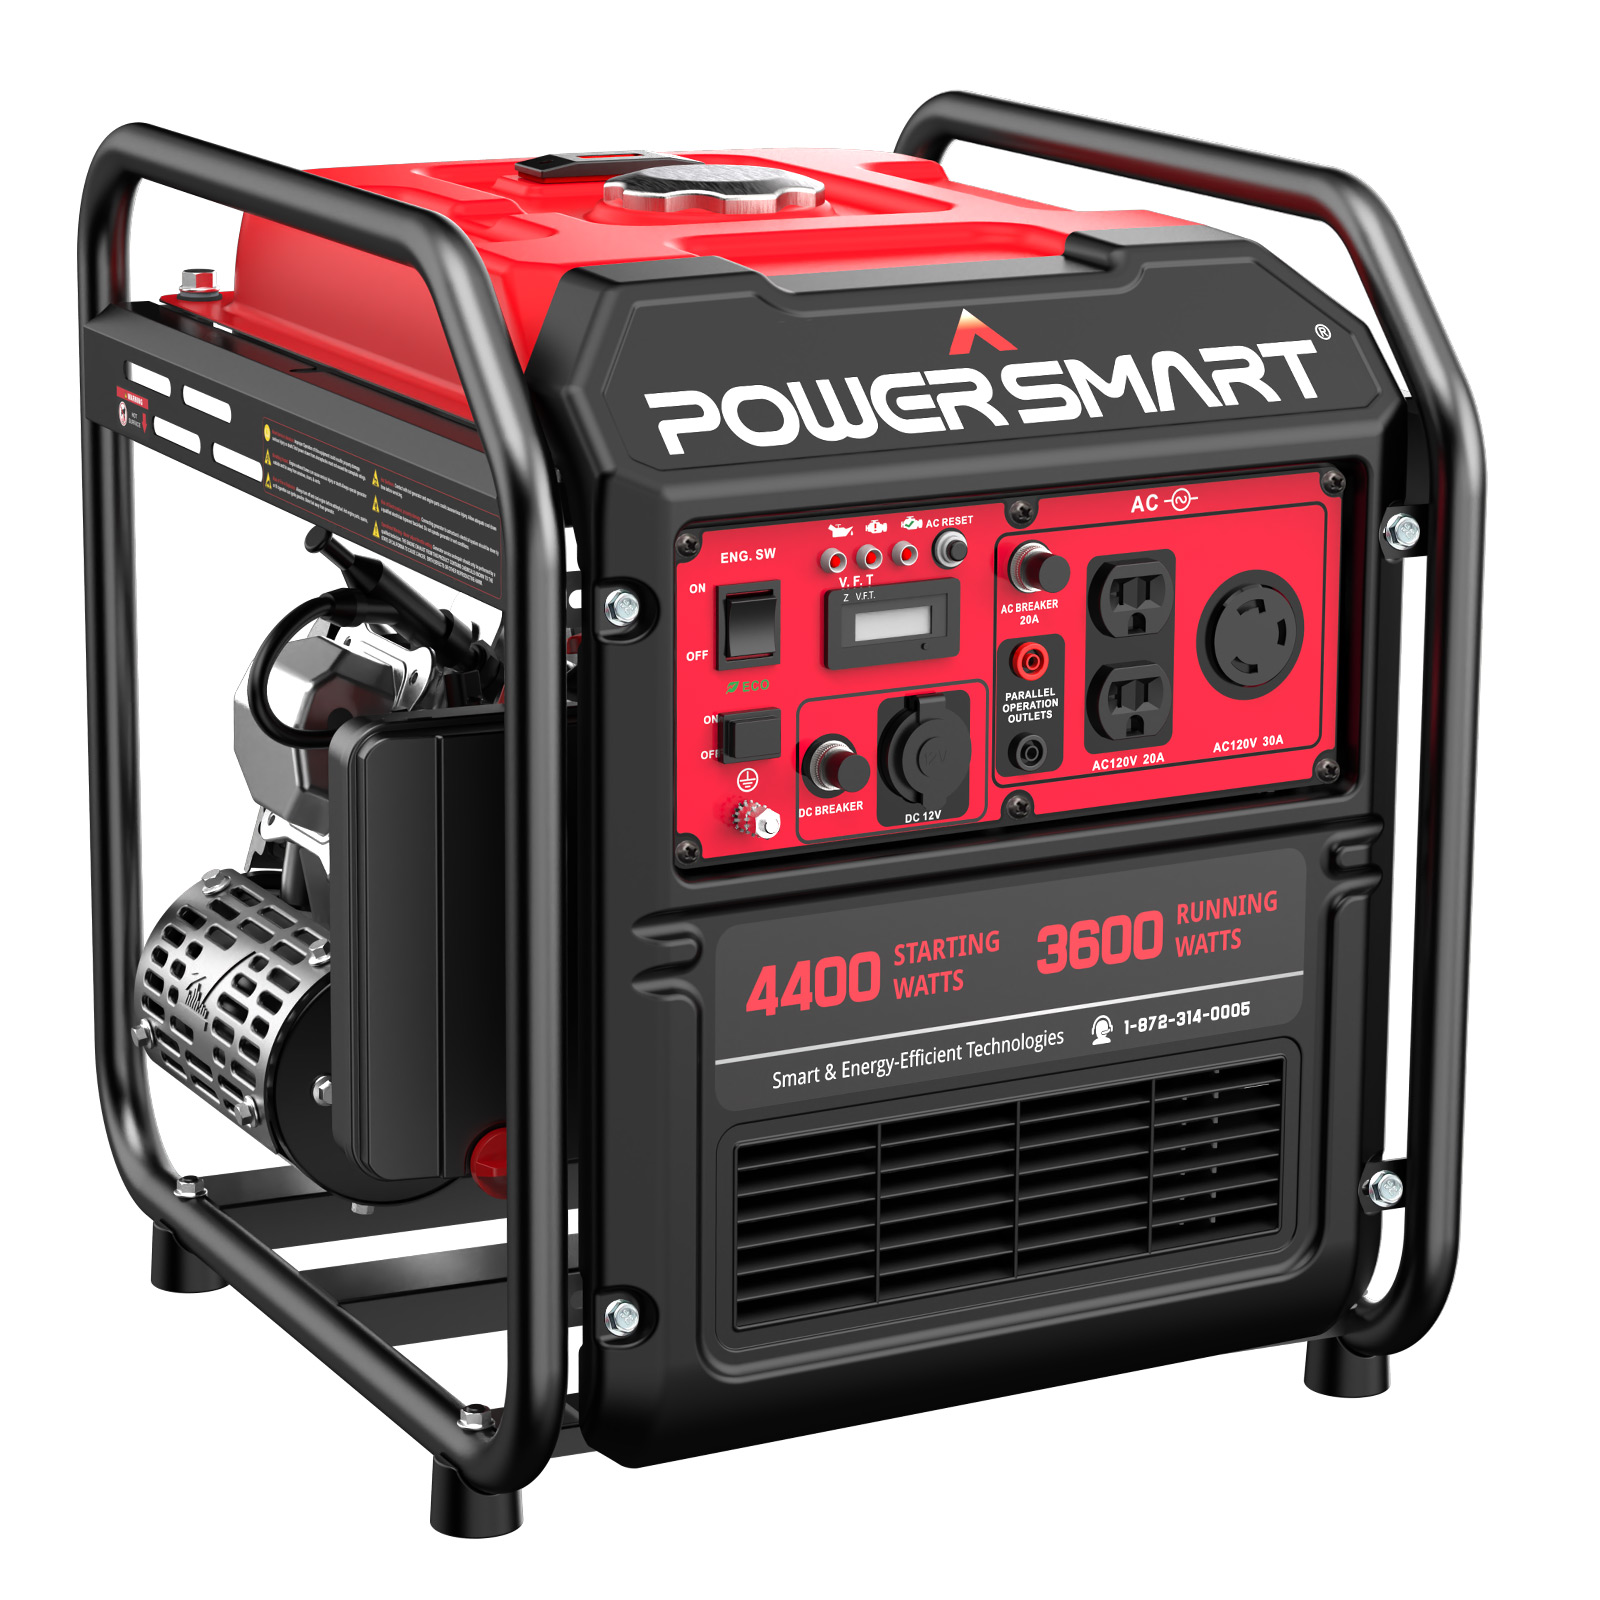 PowerSmart 4400-Watt Gasoline Generator for Outdoor and Home Use,EPA Compliant - image 1 of 11